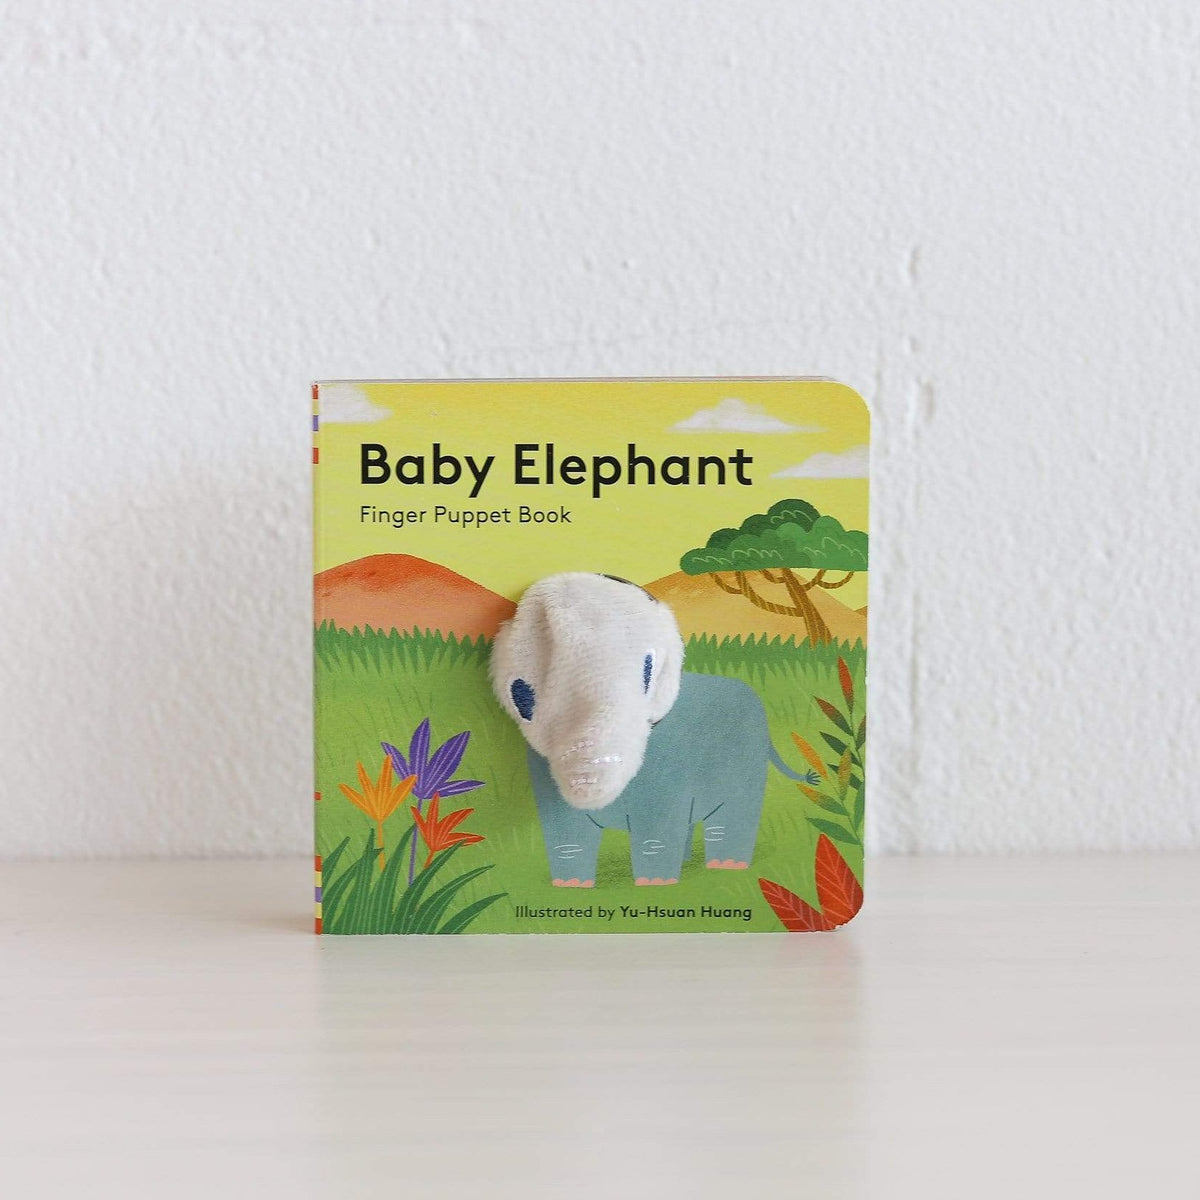 Baby Yeti: Finger Puppet Book [Book]